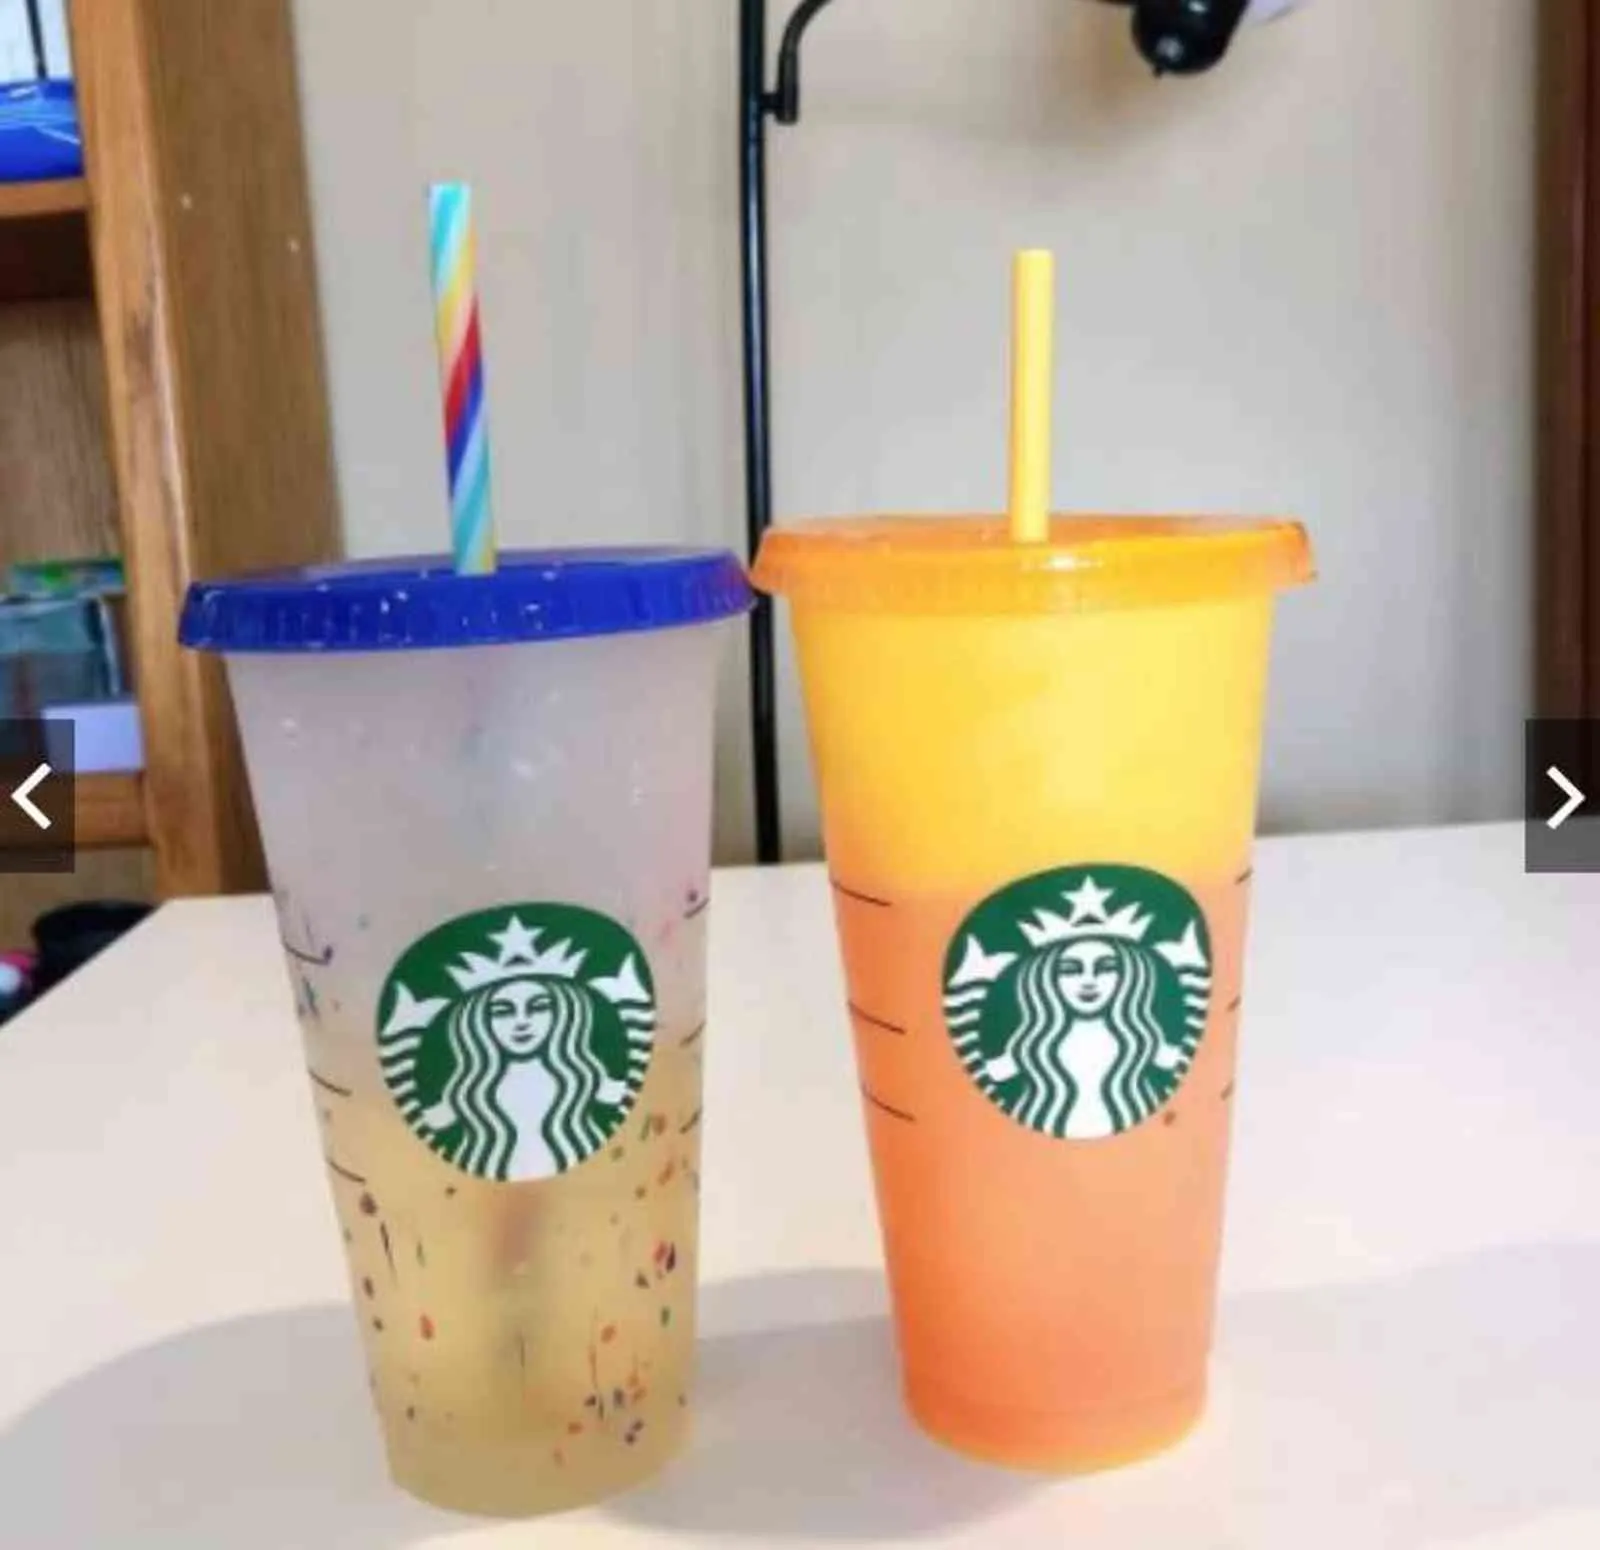 Herbruikbaar 's Starbucks Tumbler kleur veranderen Starbucks Tumbler originele Starbucks Cups PP Food Grade 24oz700ml met stro H112544